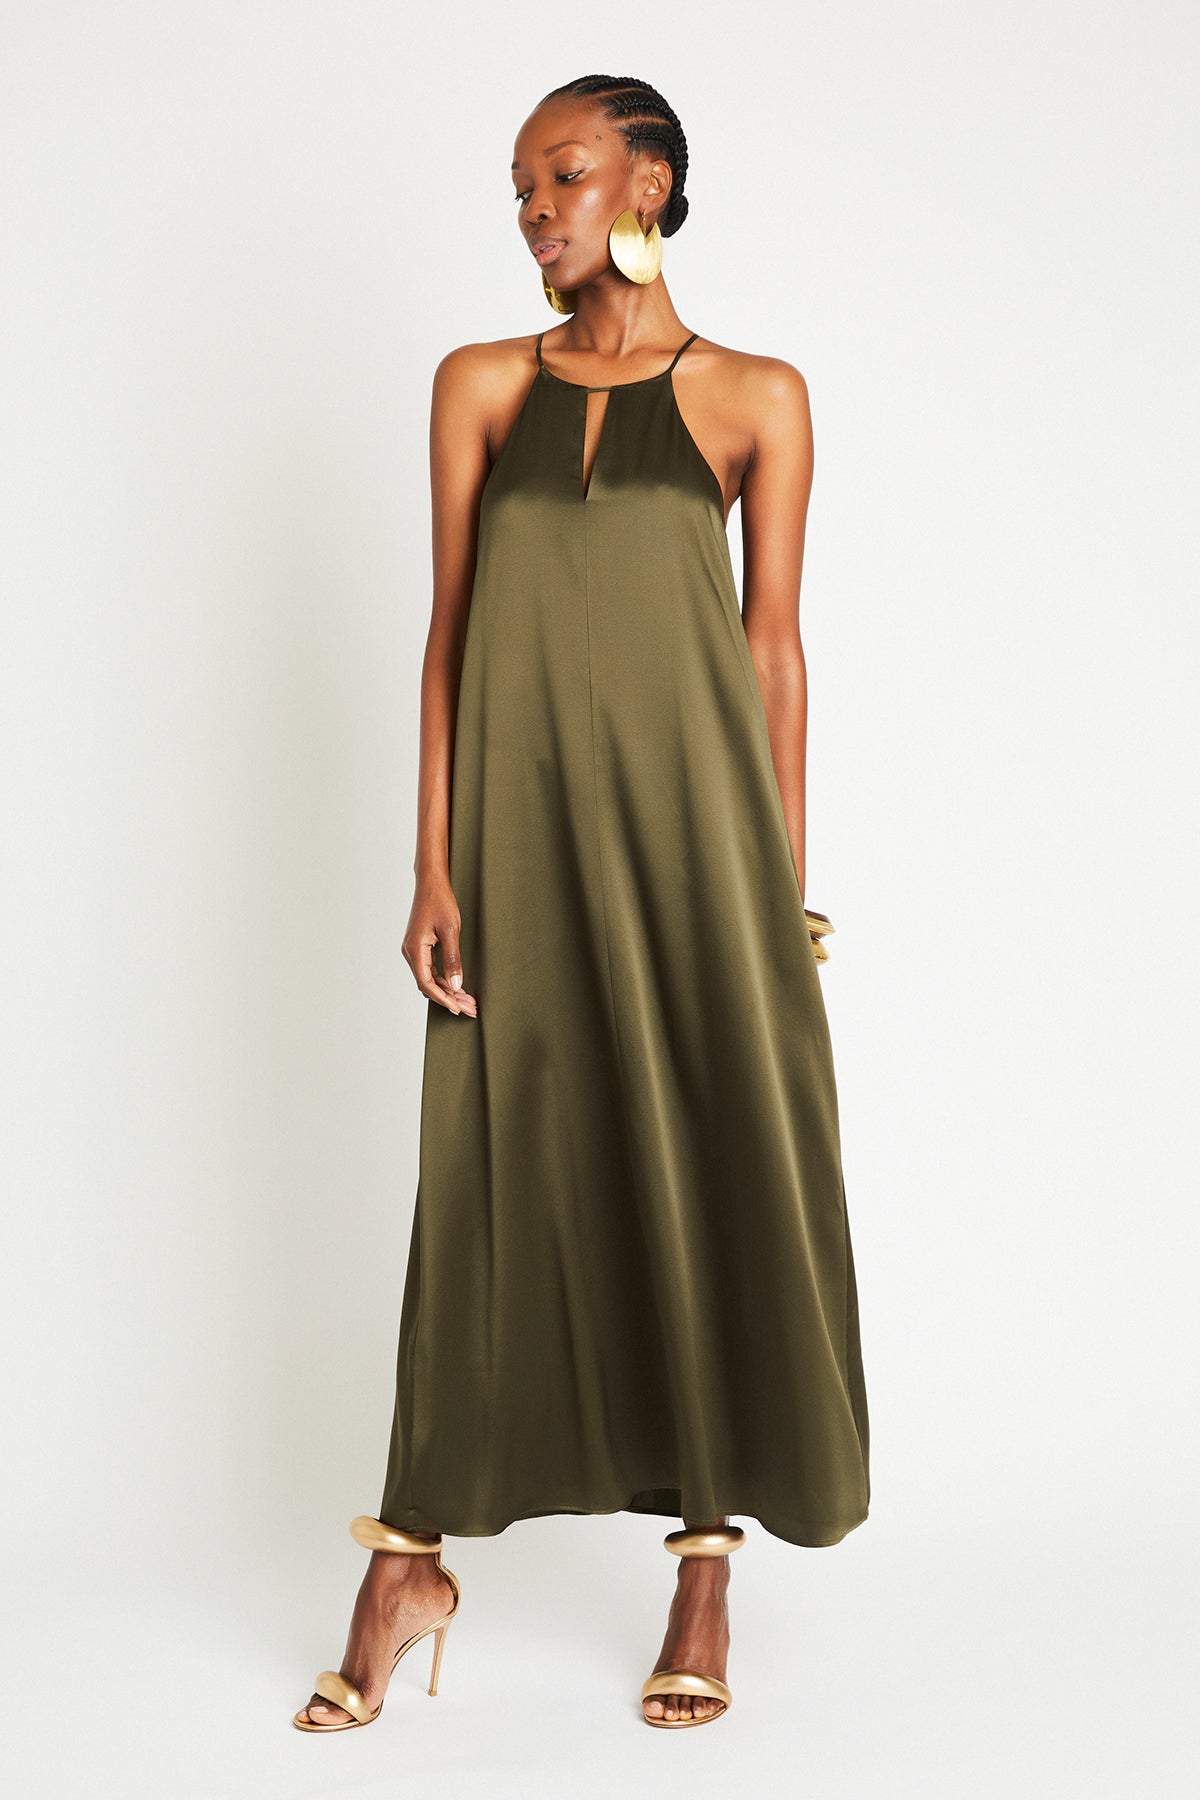 + Beryll Silk Dress Sienna | Olive - + Beryll Silk Dress Sienna | Olive